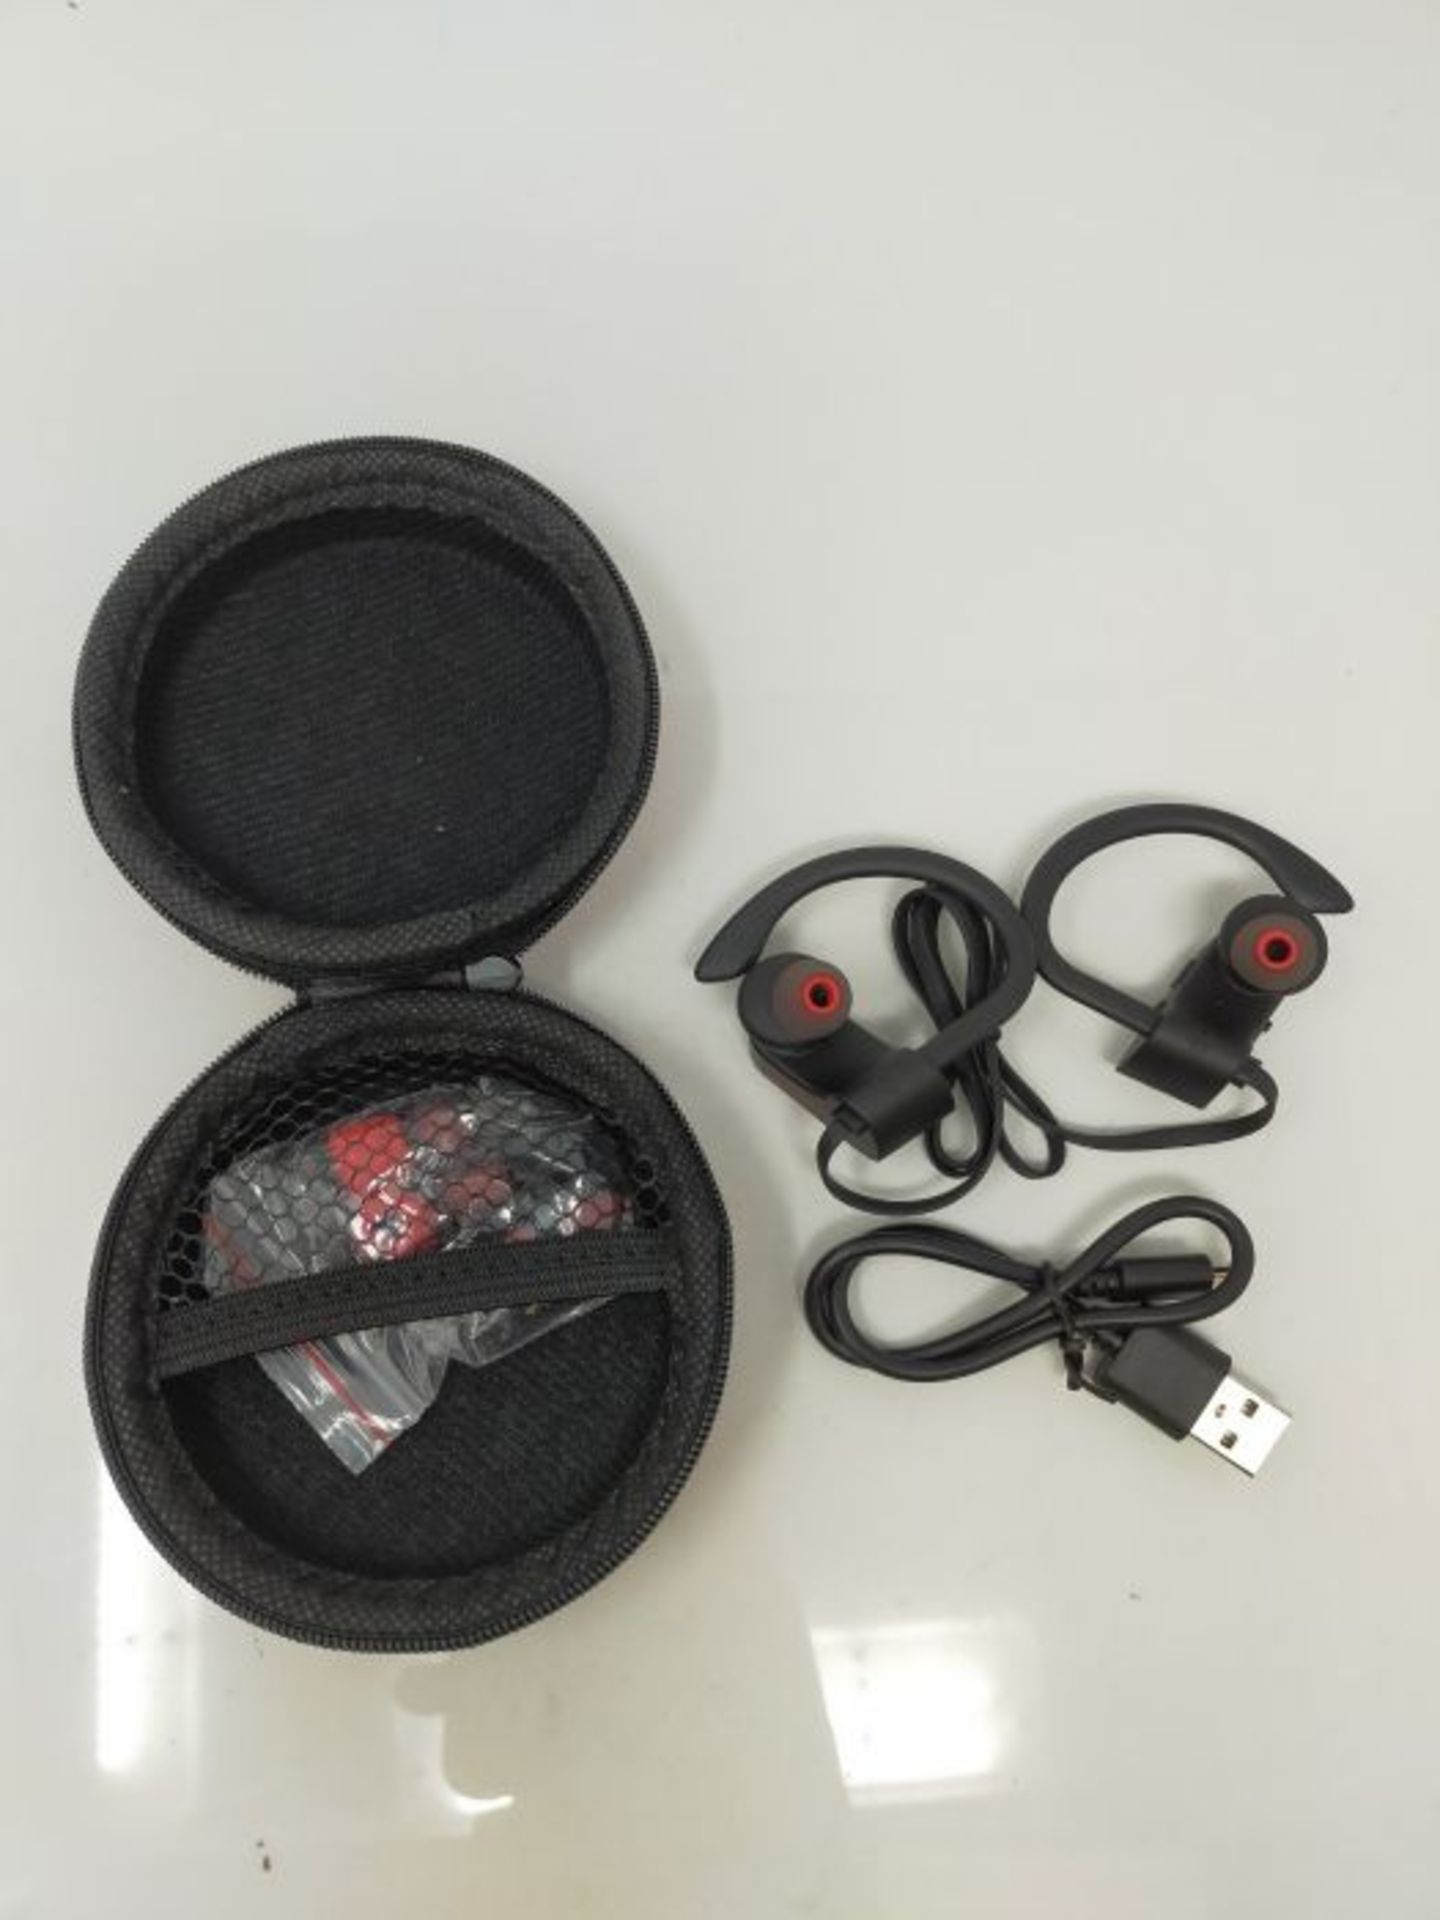 FeinTech AKH 5-00 Bluetooth 5.0 Sport Headphones Earbuds Microphone AAC IPX7 Black - Image 3 of 3